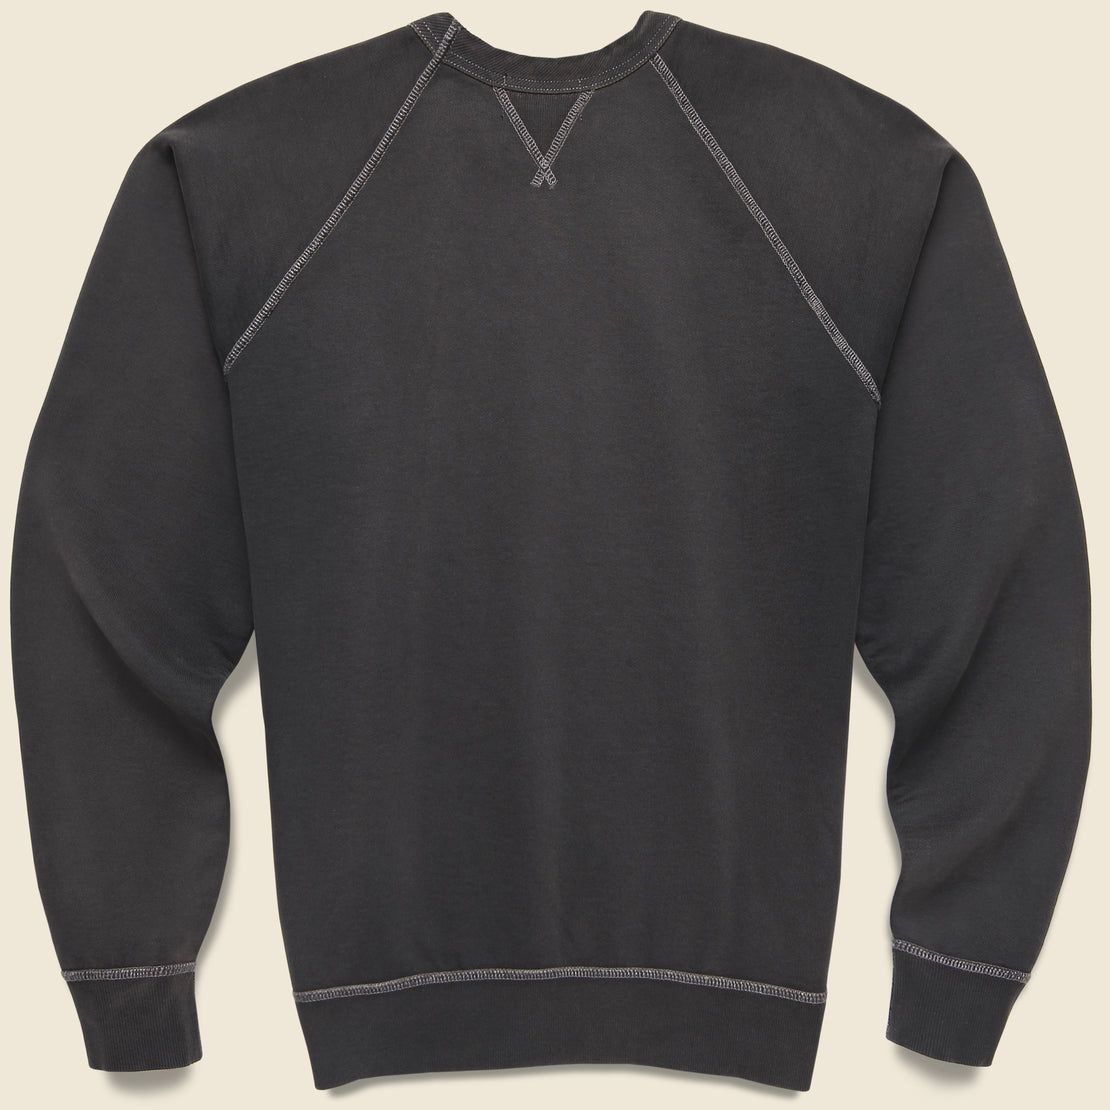 French Terry Sweatshirt - Black Indigo - RRL - STAG Provisions - Tops - Fleece / Sweatshirt